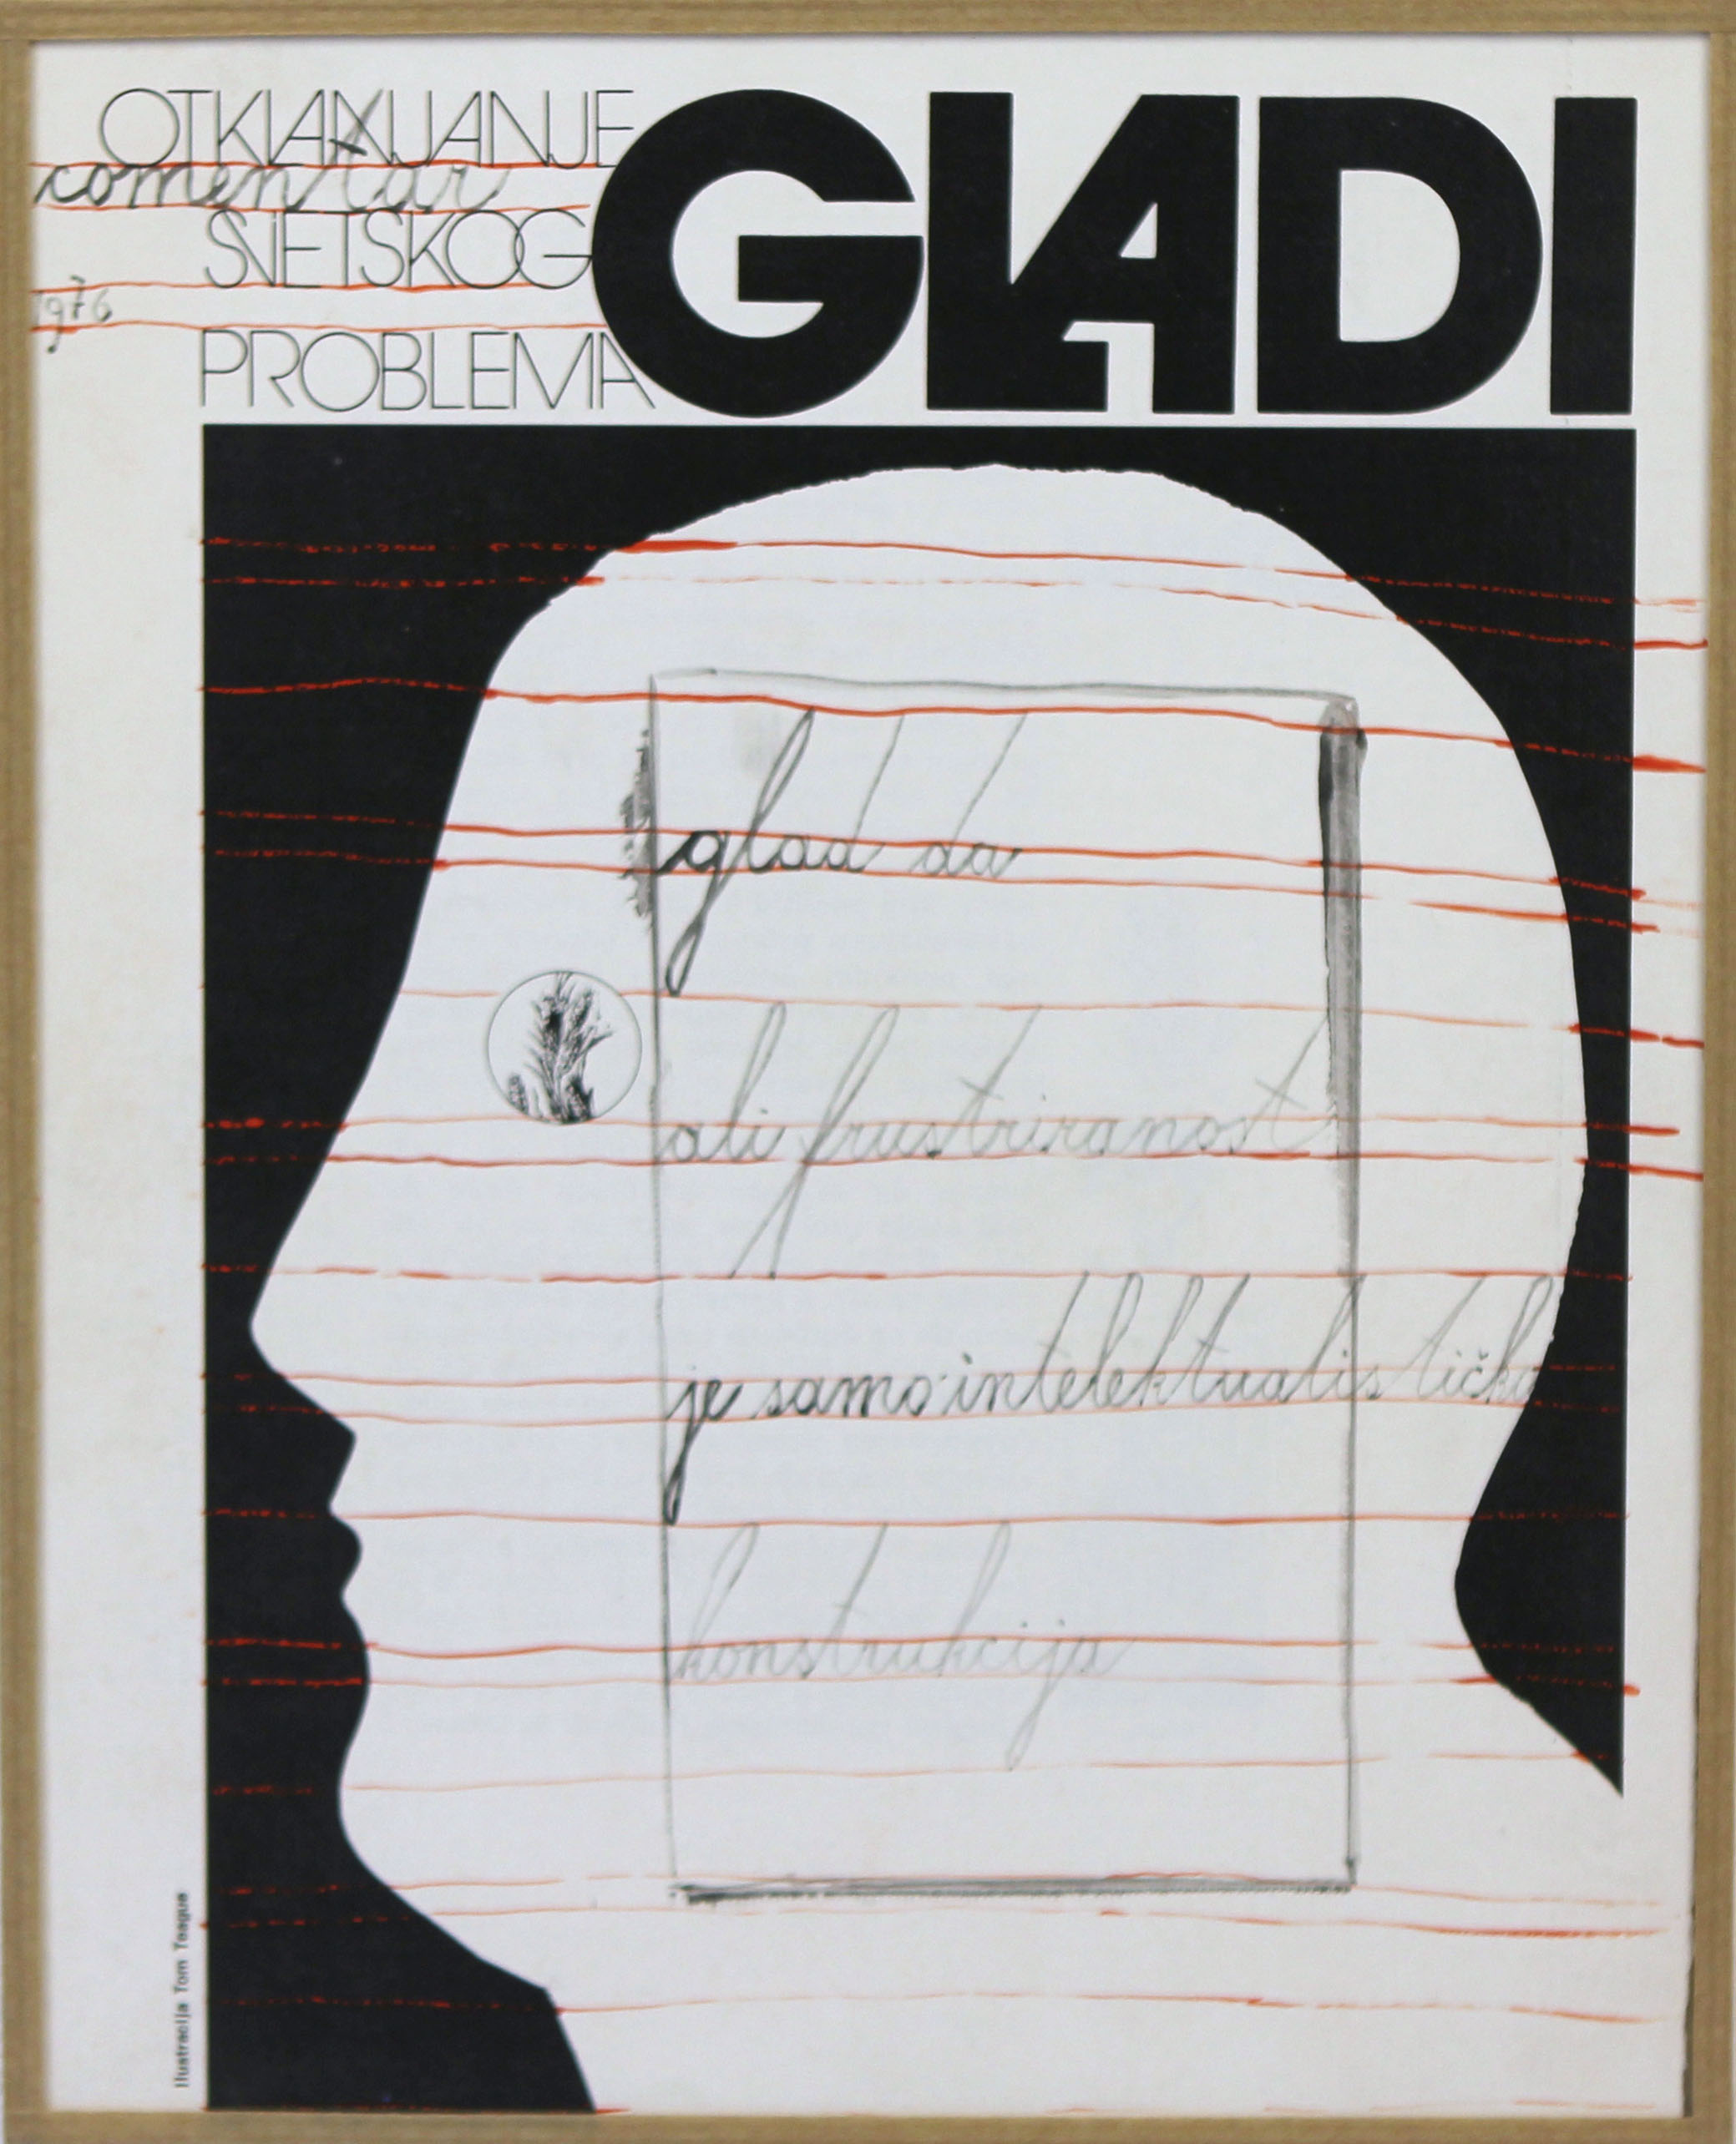 Comentar, tempera on printed paper, 27 x 21.7 cm, 1976 